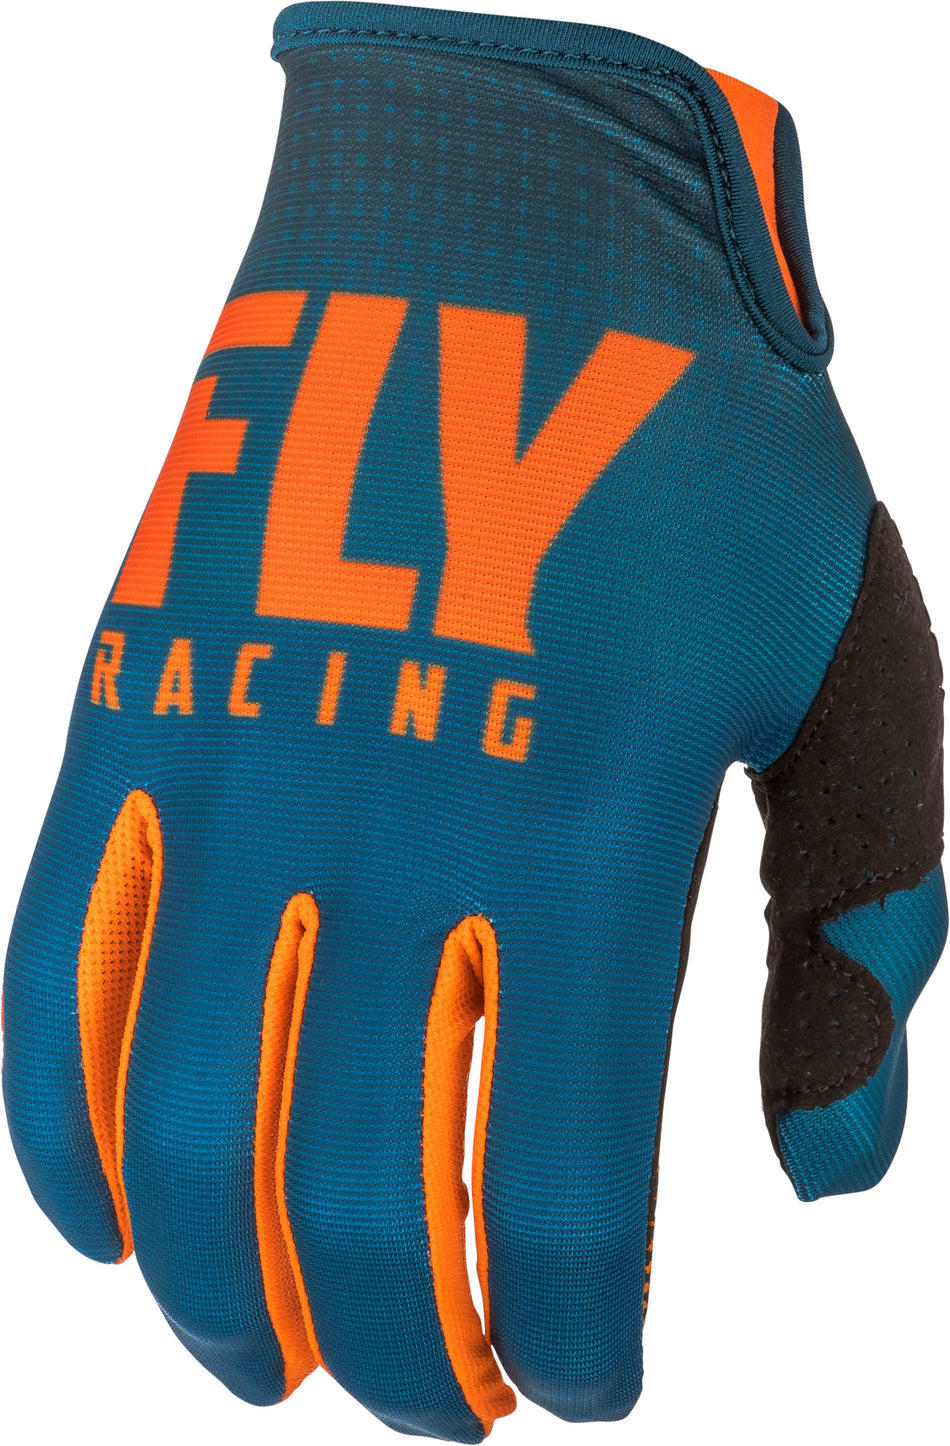 FLY RACING Lite Gloves Orange/Navy Sz 05 372-01605